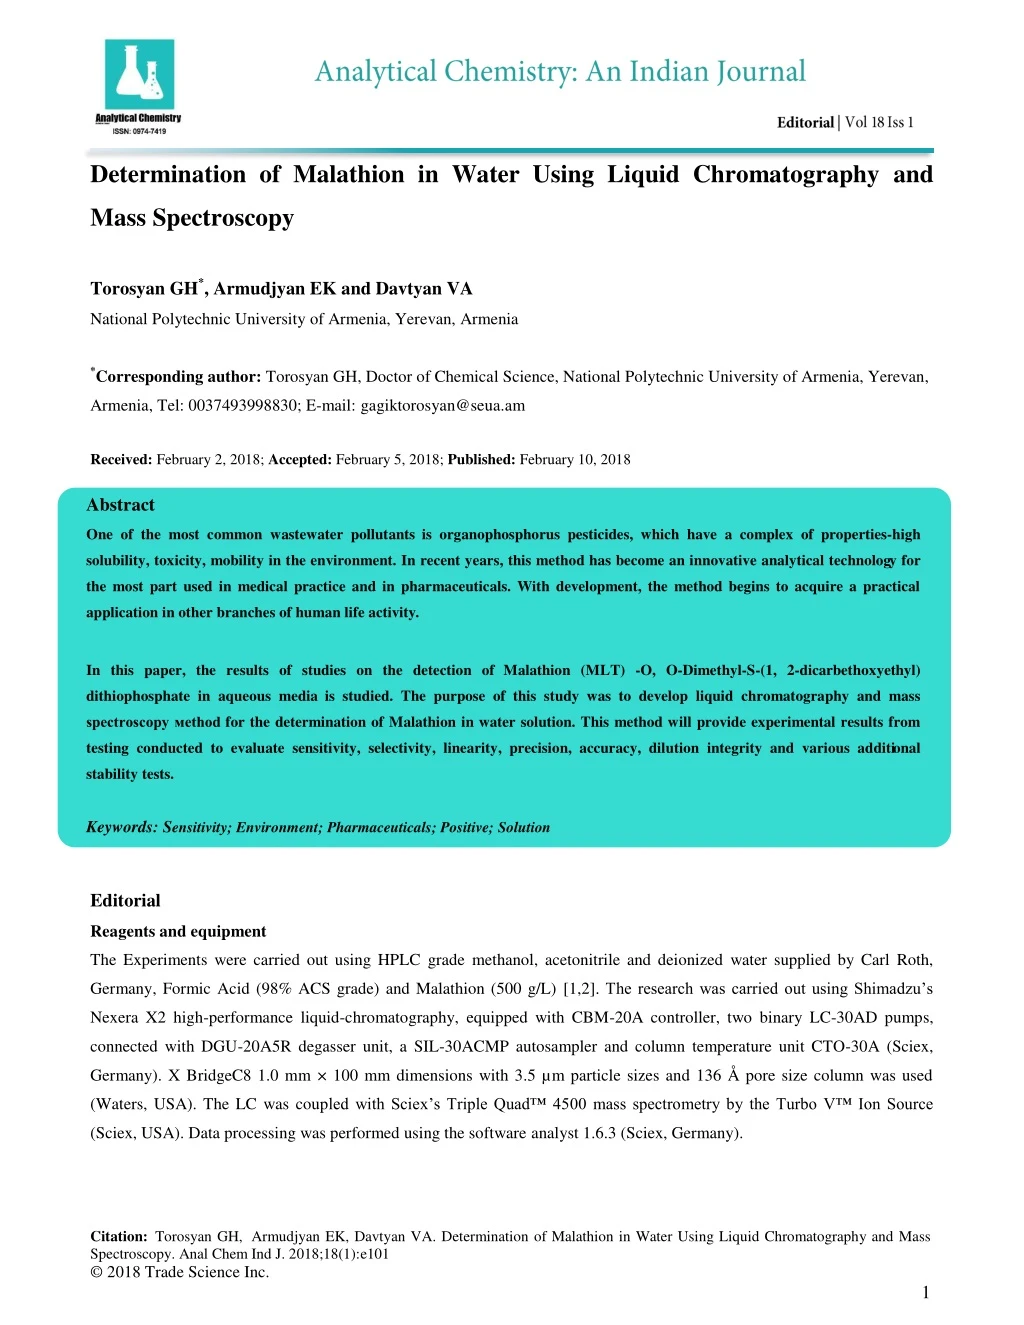 determination of malathion in water using liquid